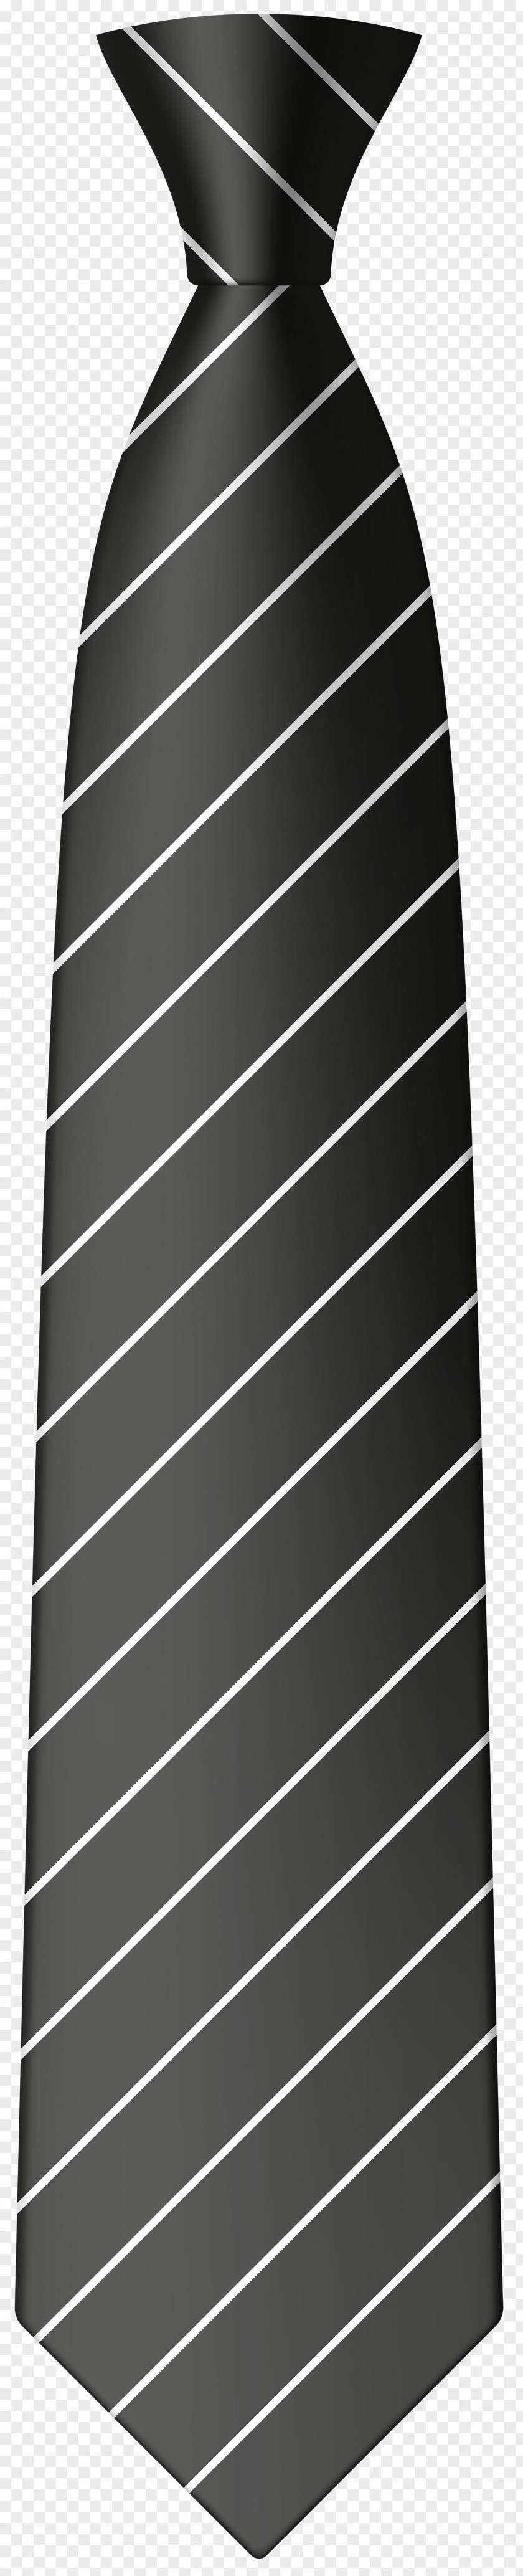 Black Tie Drinking Illustration Clip Art Necktie Bow Image PNG